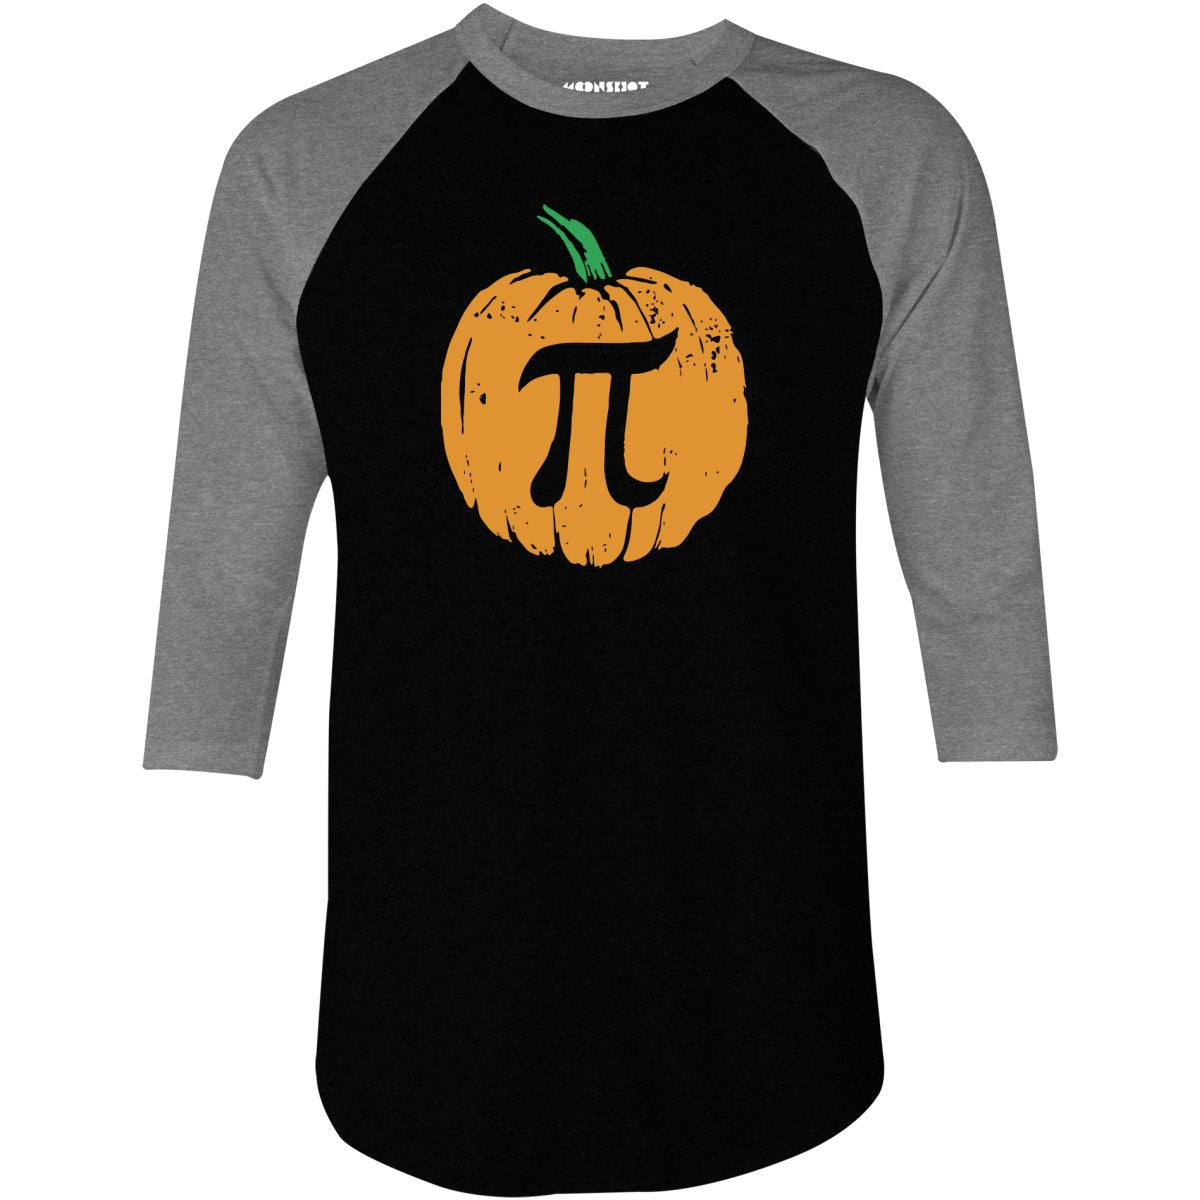 Pumpkin Pi - 3/4 Sleeve Raglan T-Shirt